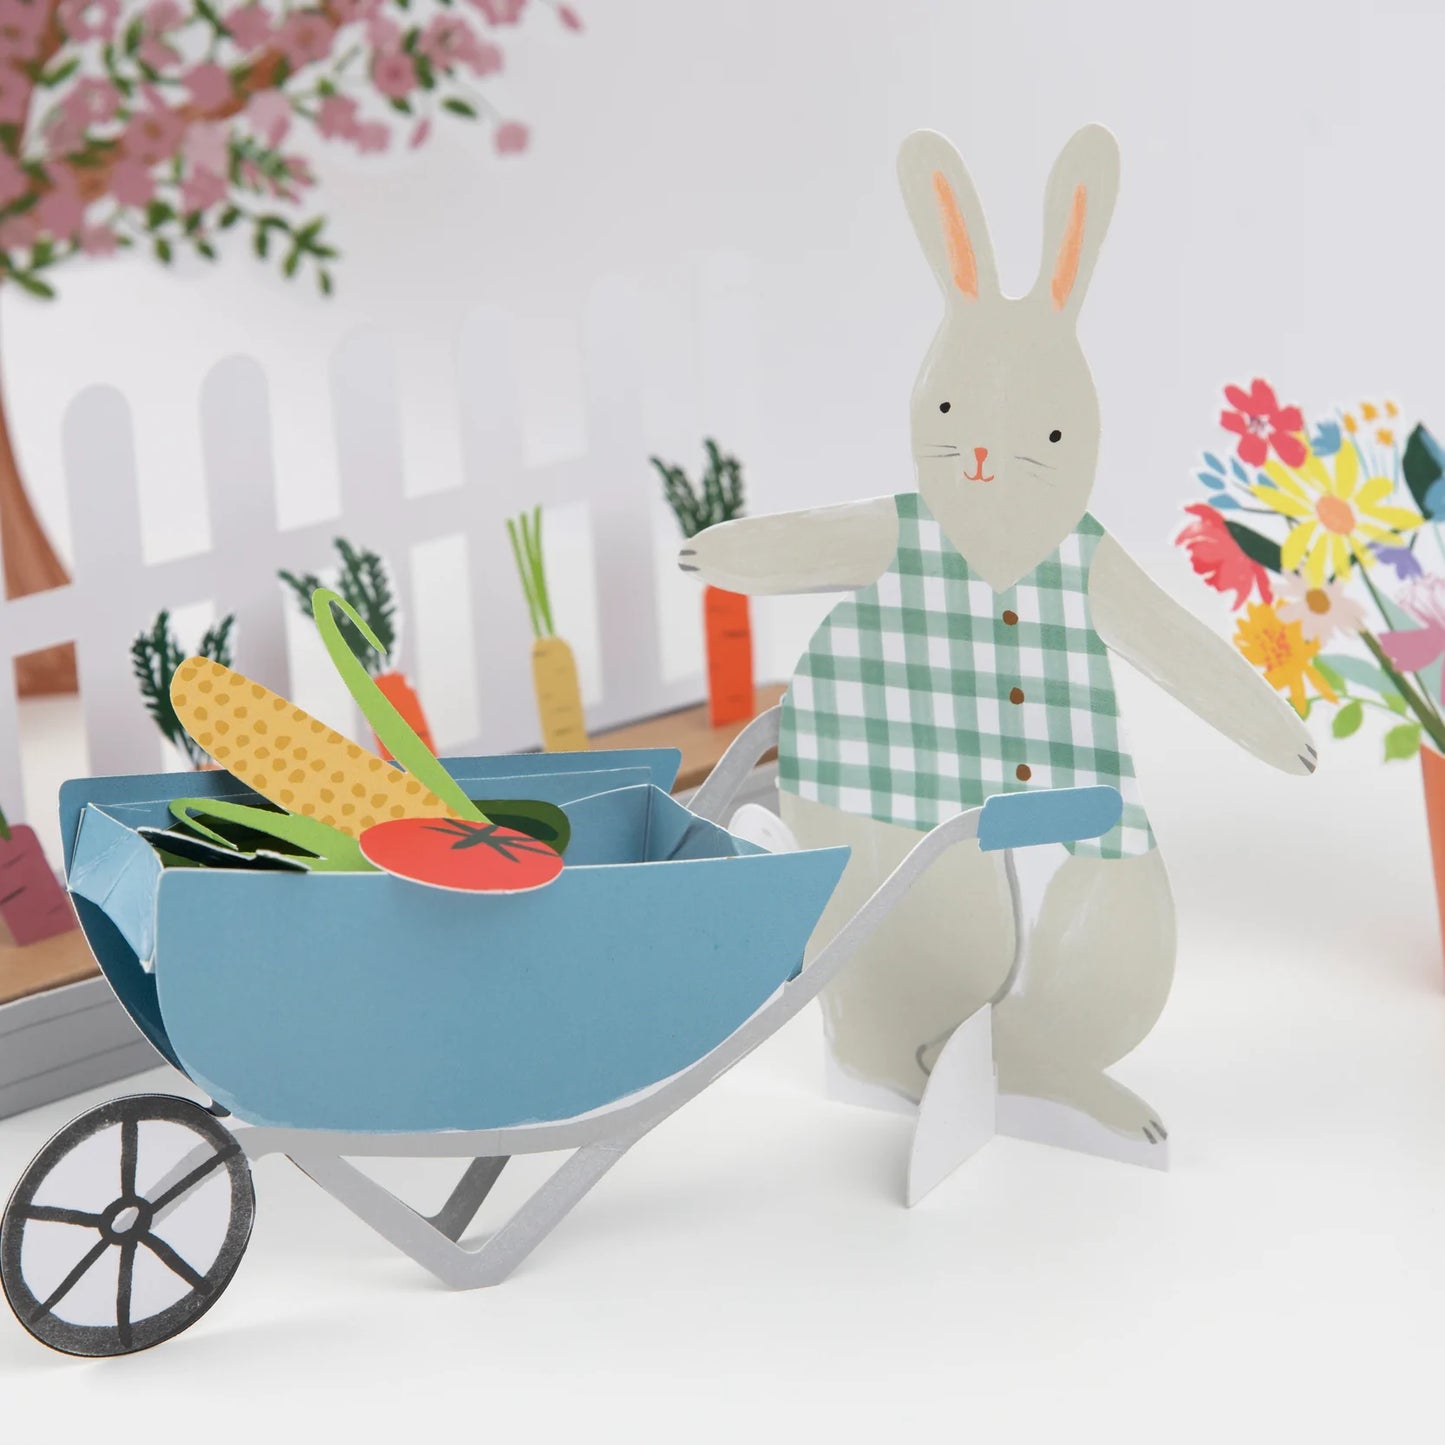 Bunny Paper Play Garden Set